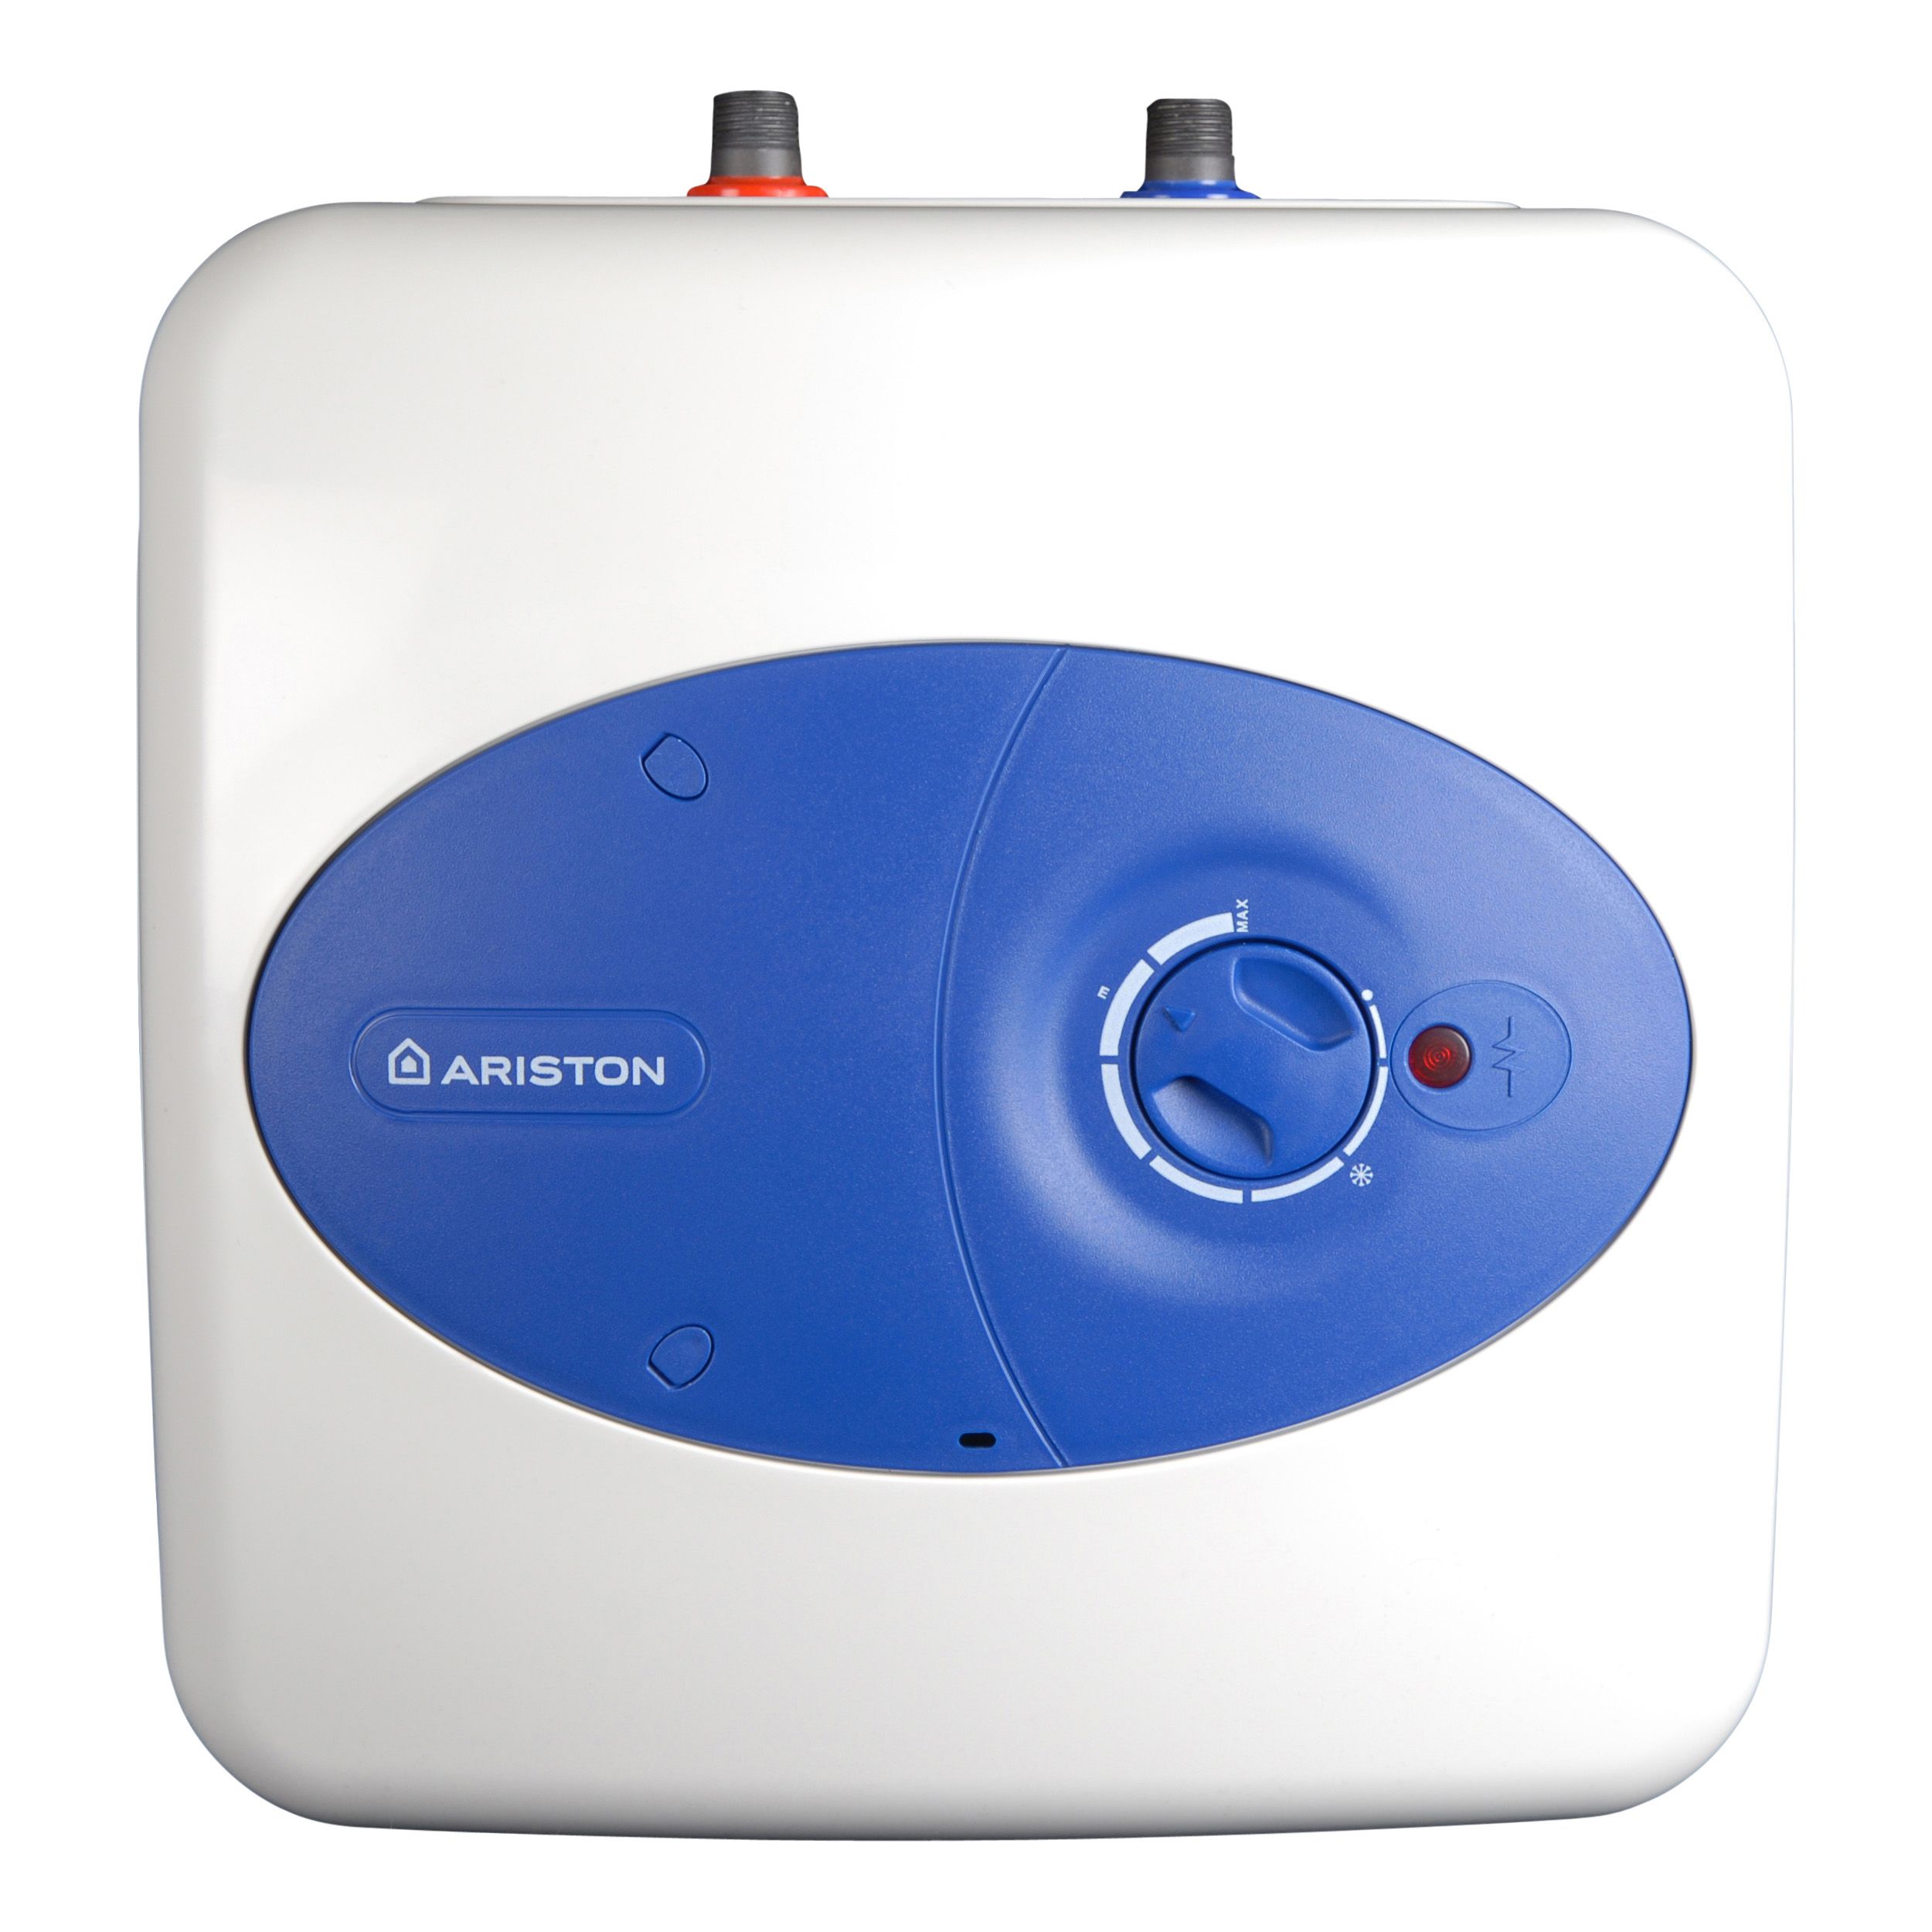 Ariston Europrisma Internal Electric Water Heater 3 Kw 15 L Departments Diy At B Q